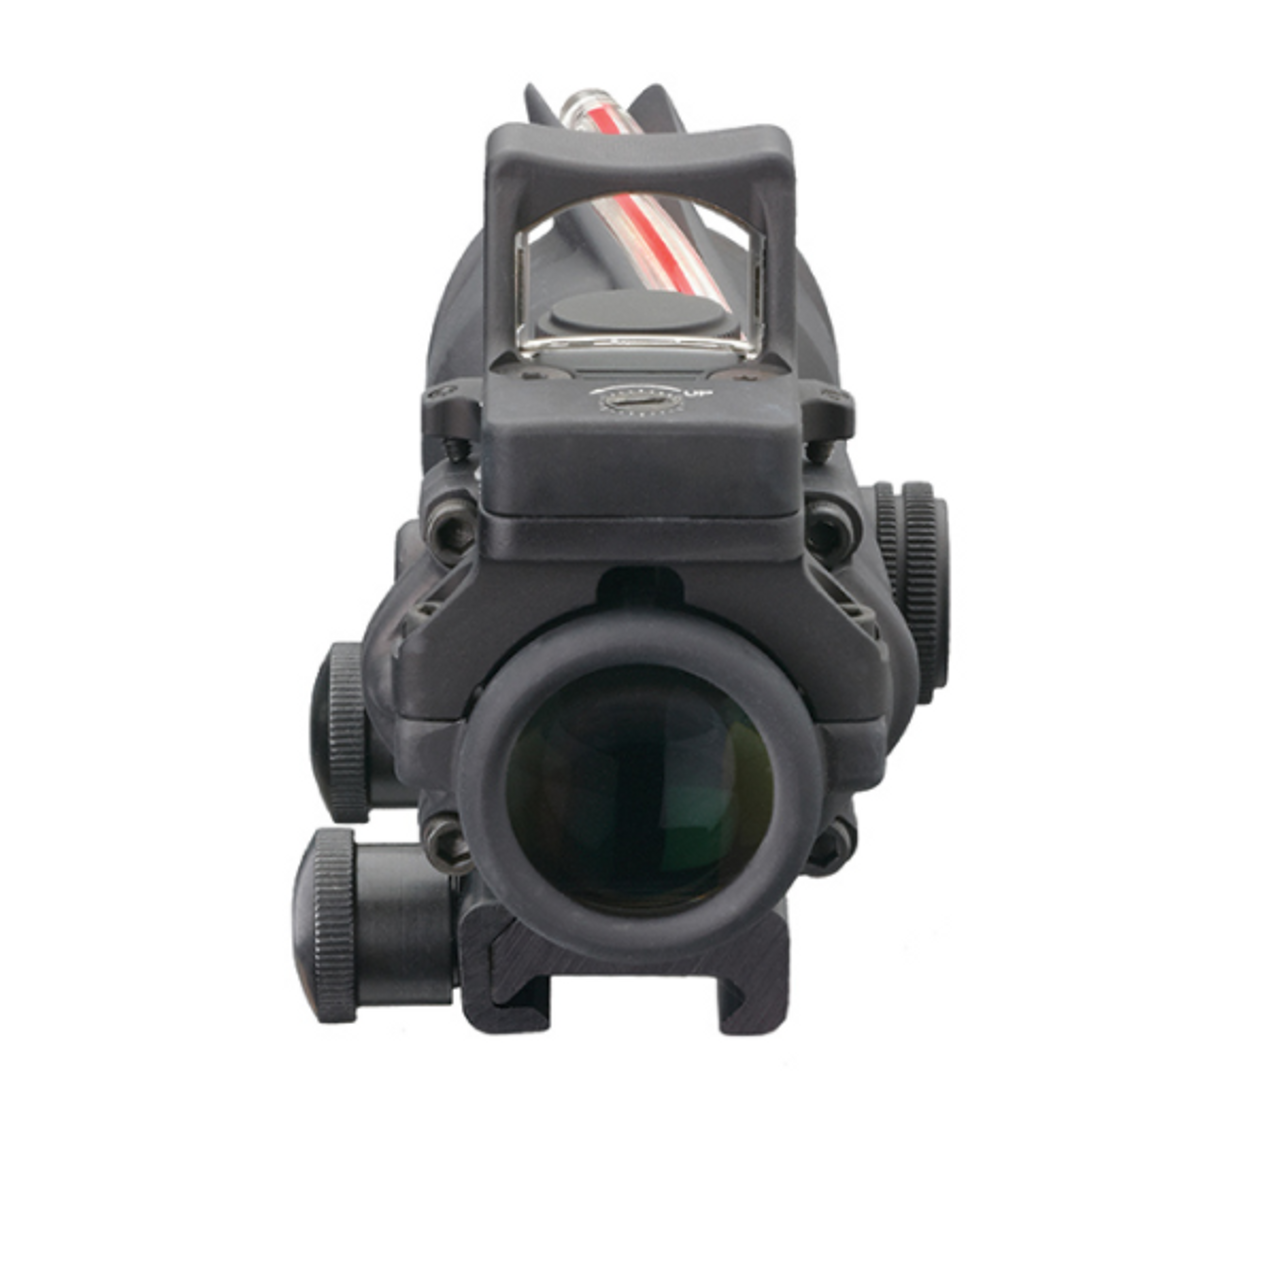 ACOG 4x32 BAC Riflescope w/ Trijicon RMR | .223 BDC Red Chevron Reticle, Thumbscrew Mount, LED 3.25 MOA Red Dot RMR Type 2